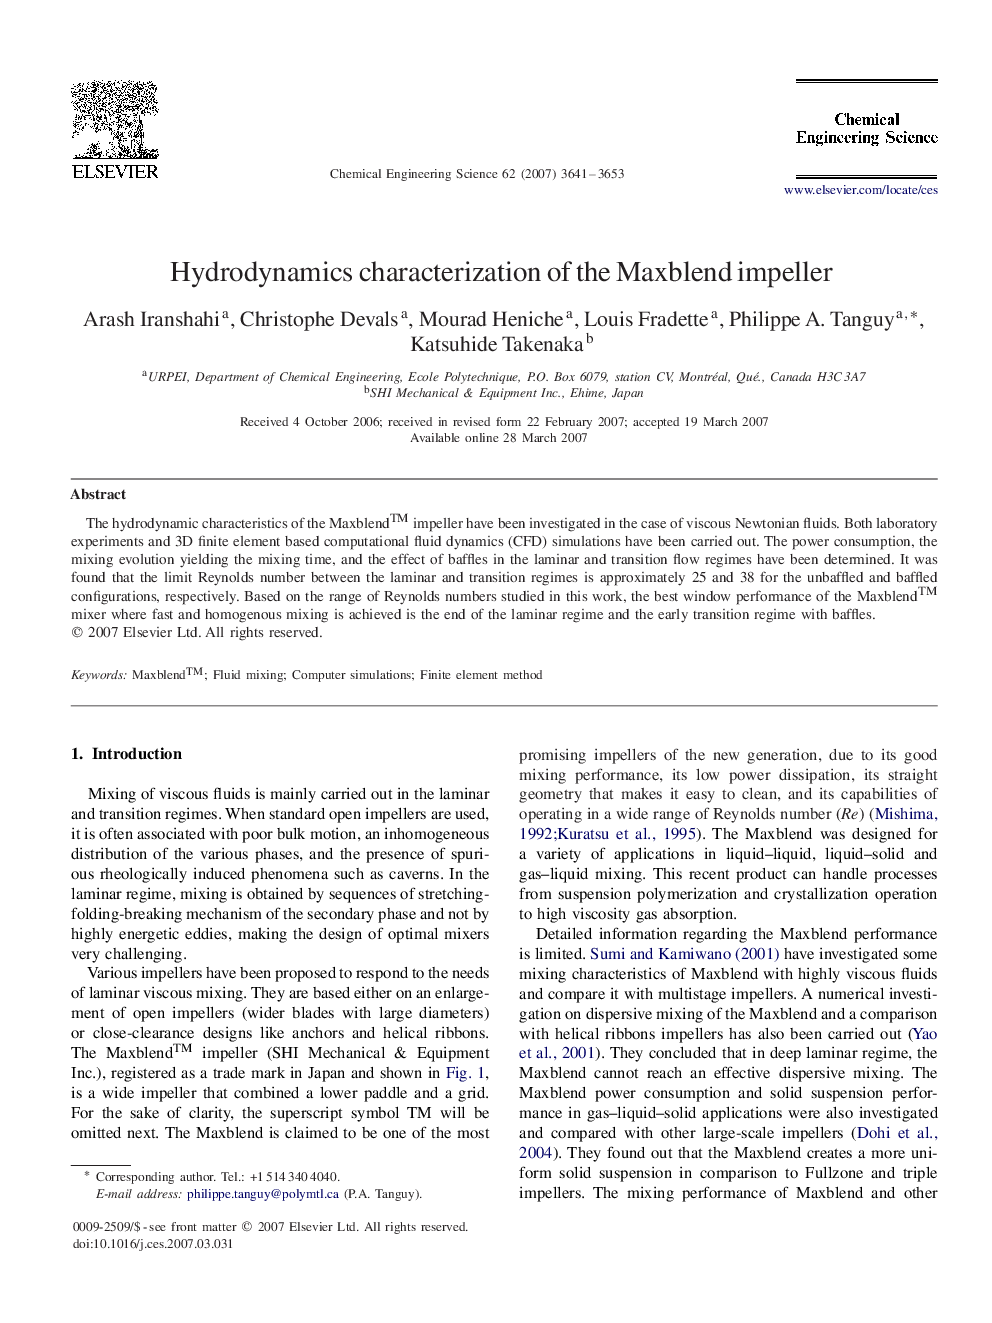 Hydrodynamics characterization of the Maxblend impeller